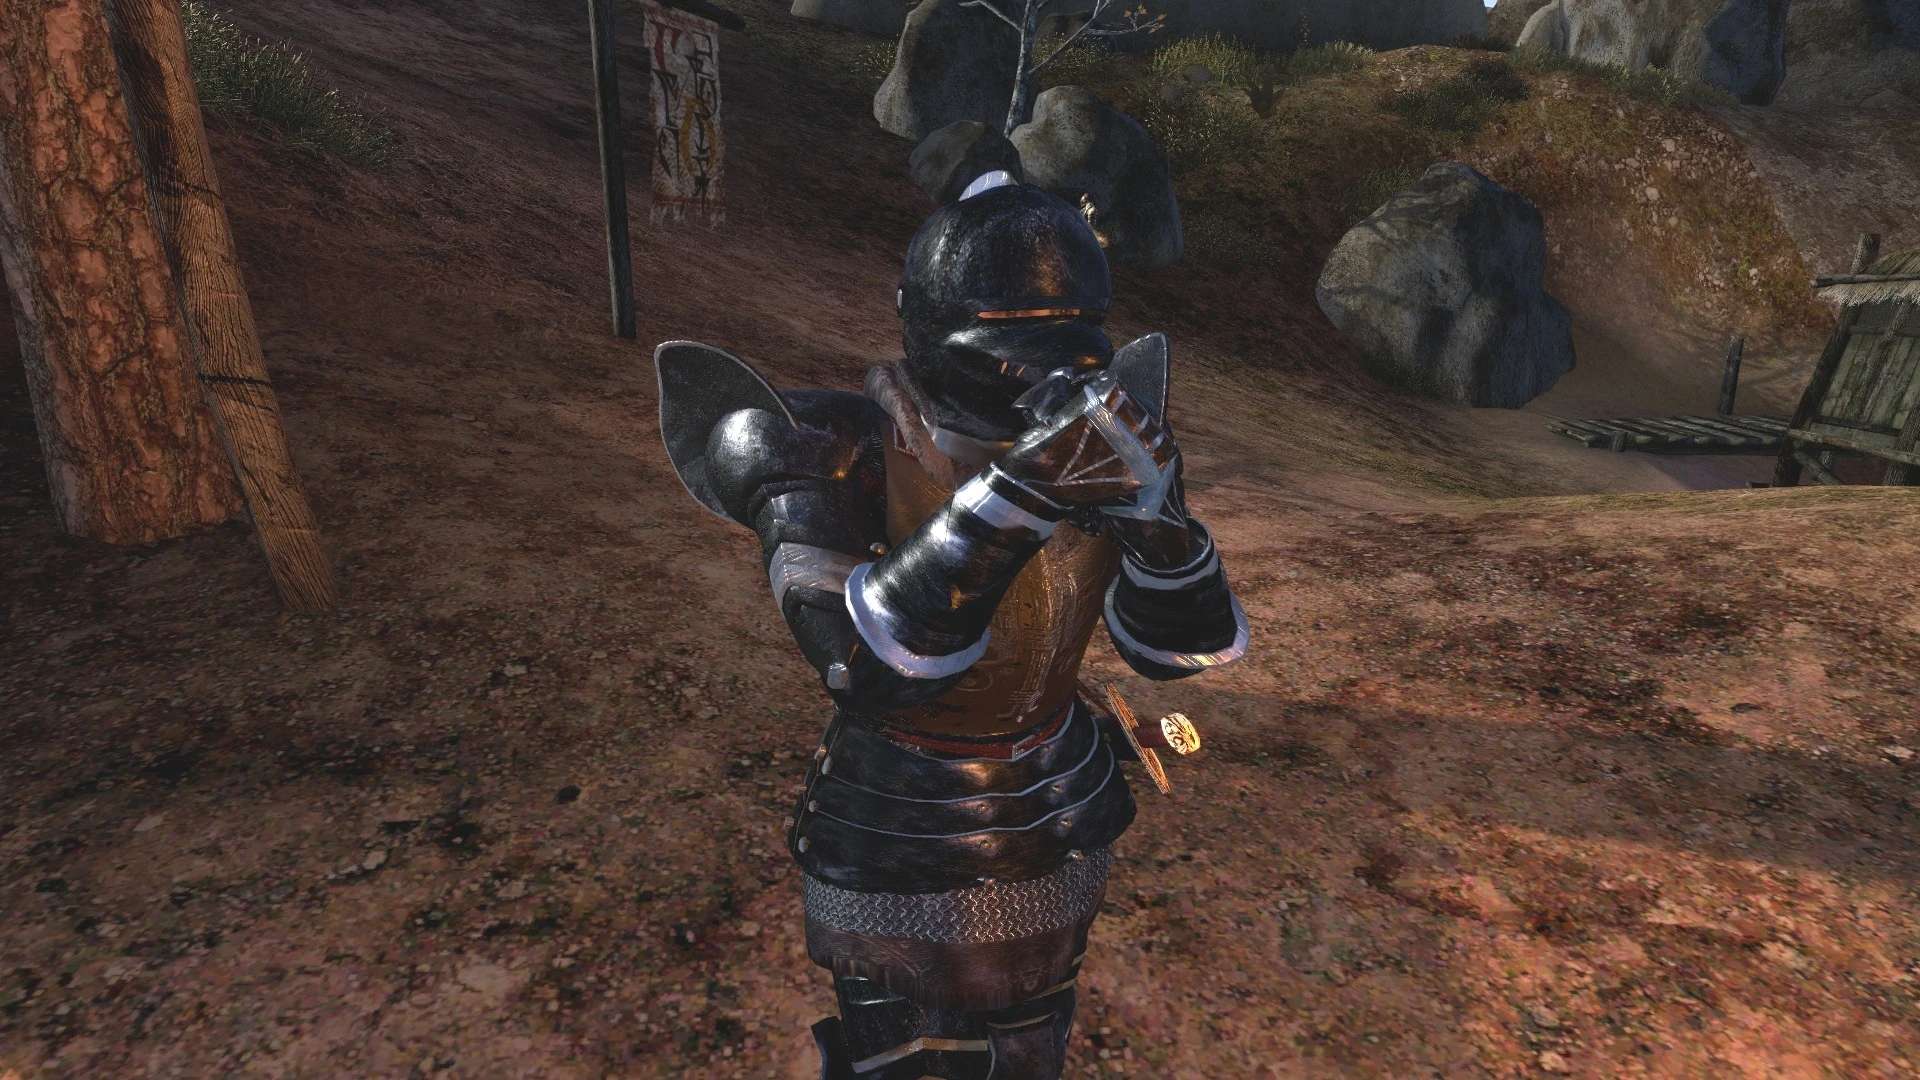 Steel Armor with PBR at Morrowind Nexus mods and community. www.nexusmods.c...